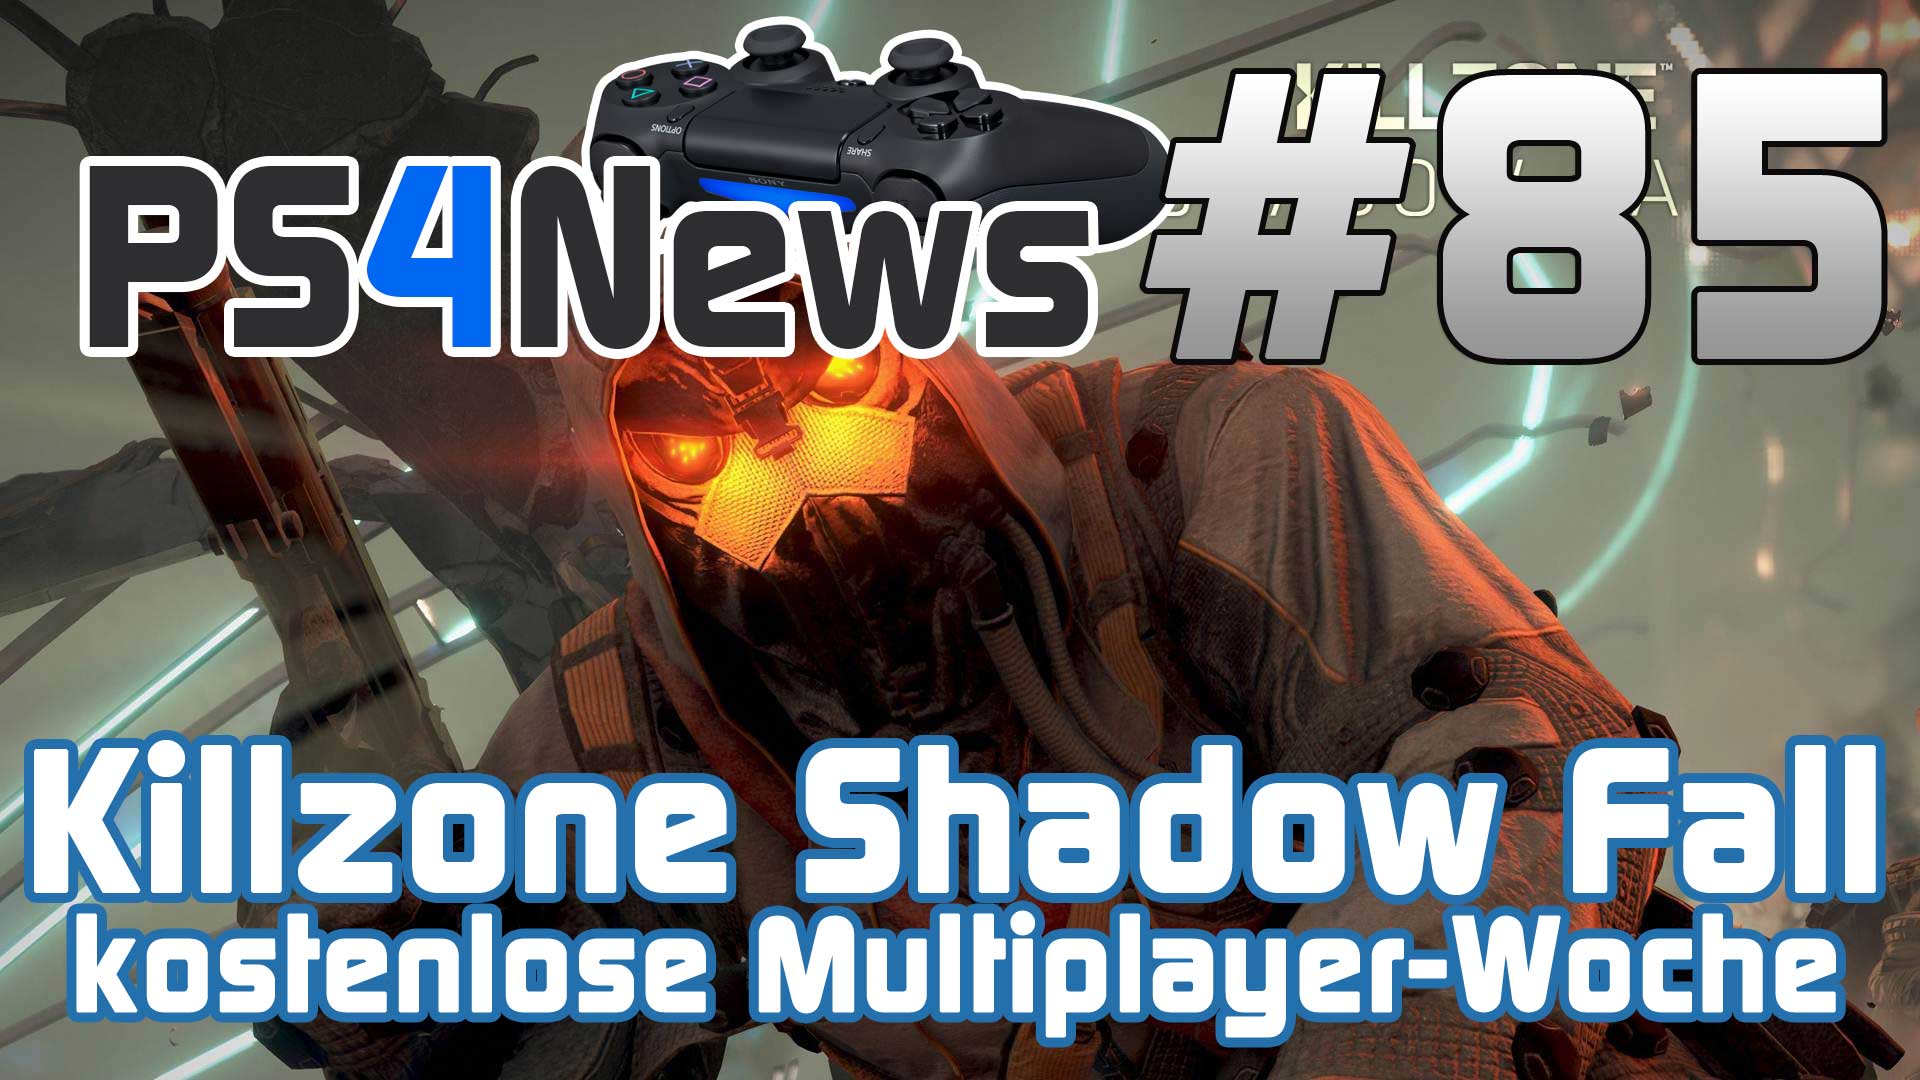 Killzone Shadow Fall Multiplayer-Modus ab 4. März kostenlos testen